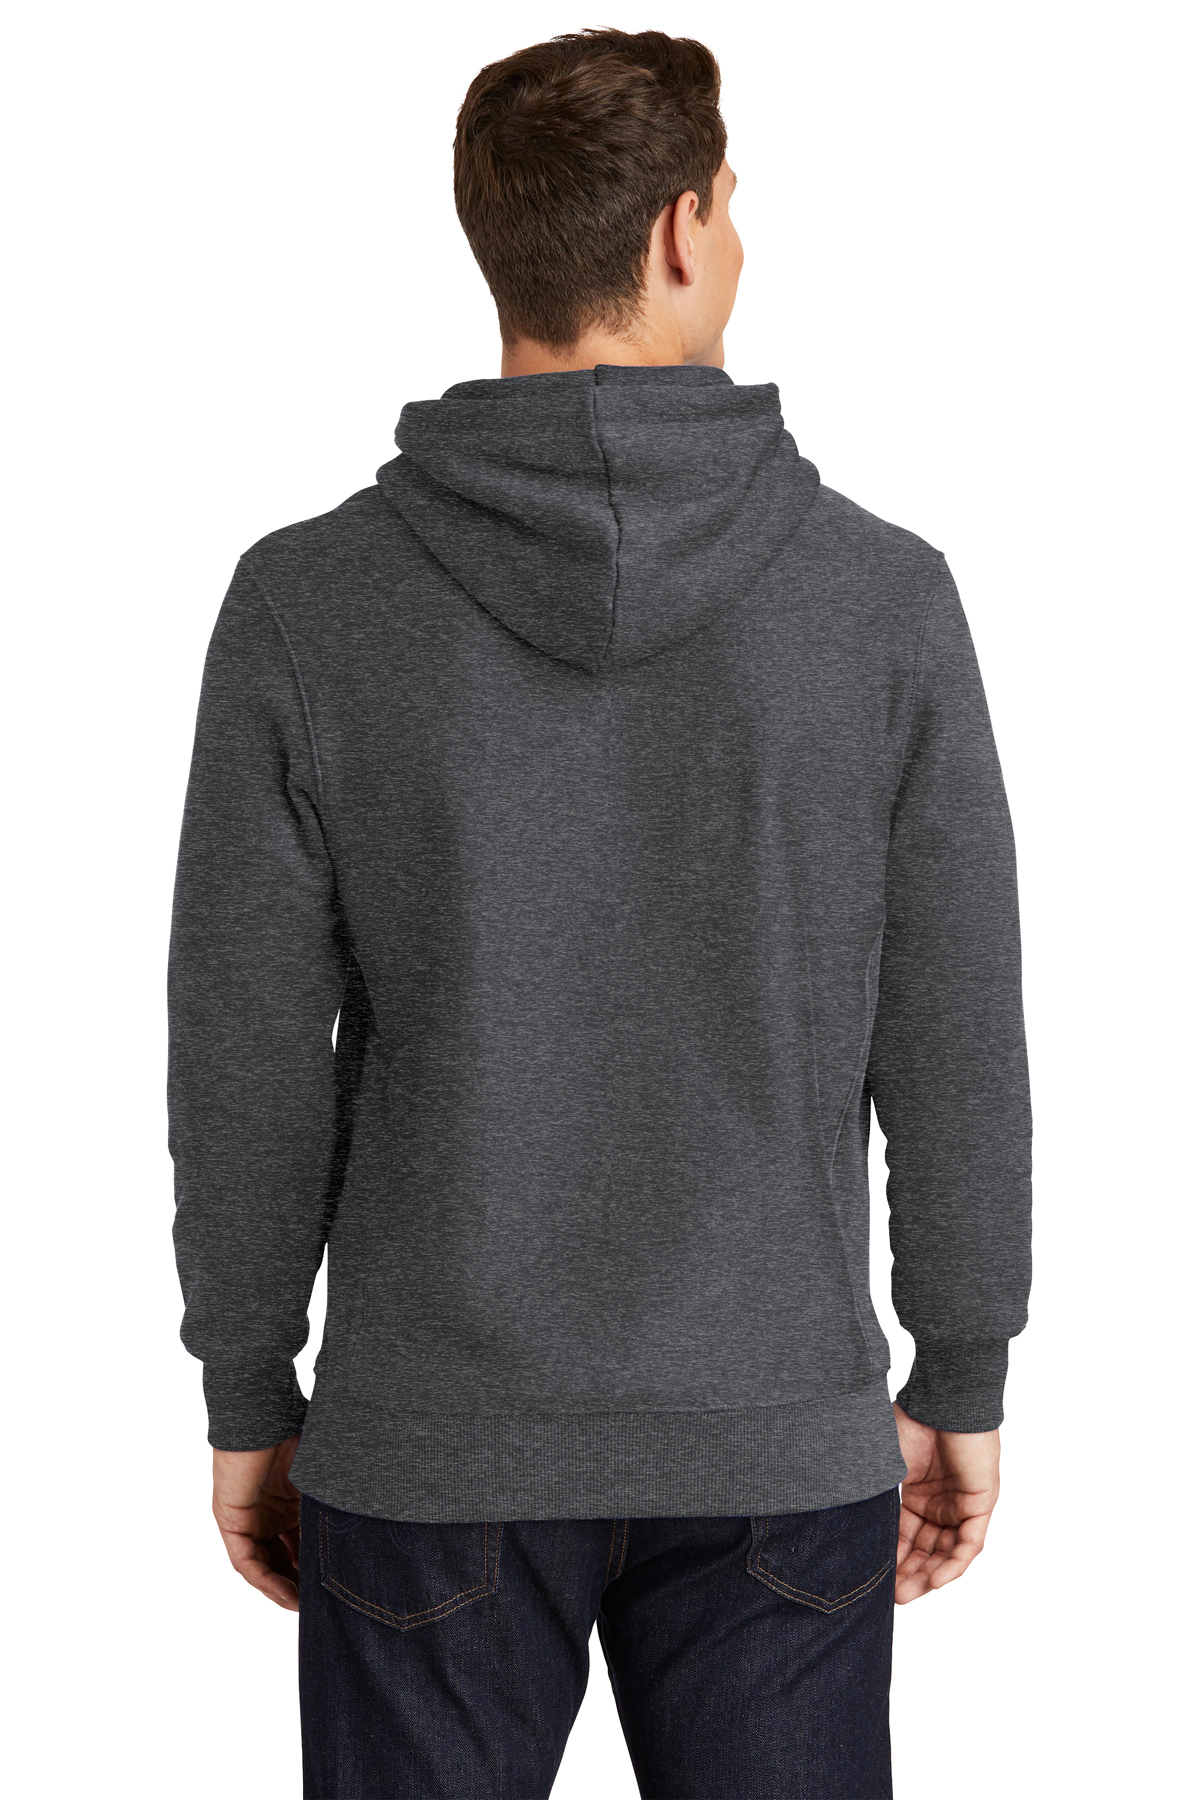 Sport-Tek Super Heavyweight Pullover Hooded Sweatshirt | Product | Sport-Tek